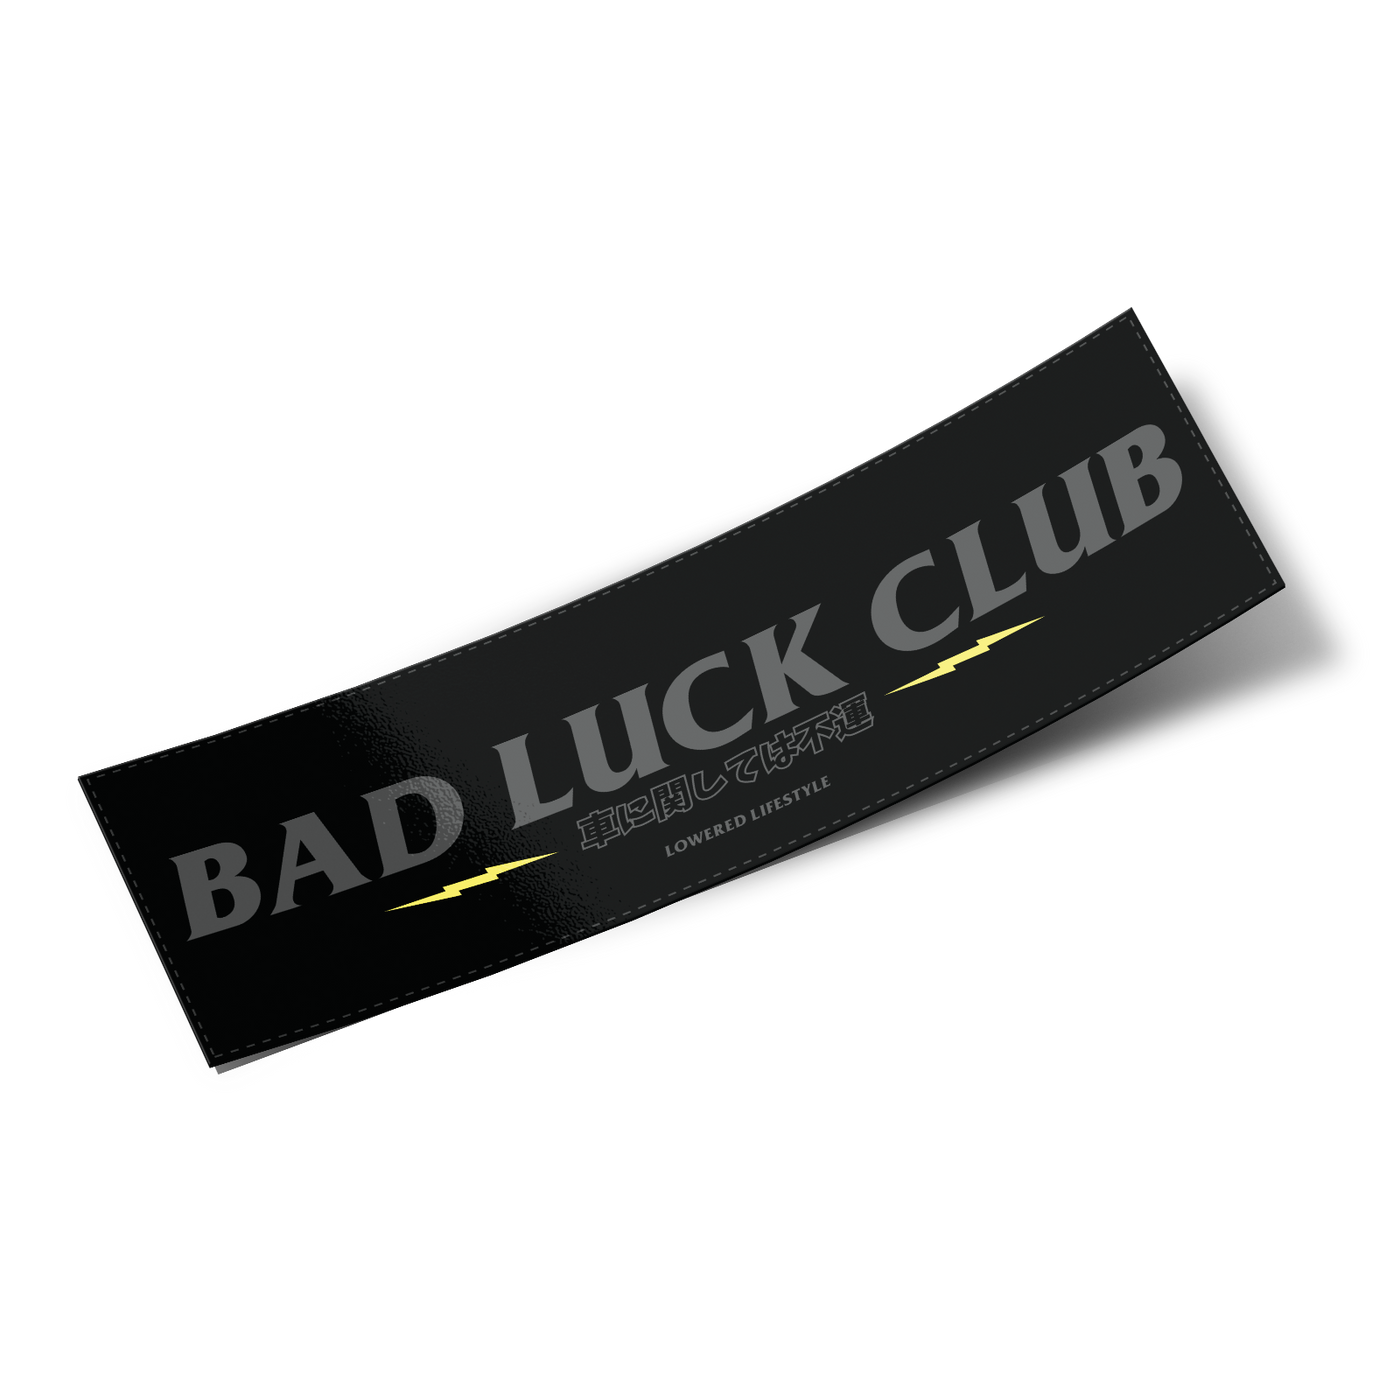 Box Sticker – Bad Luck Club